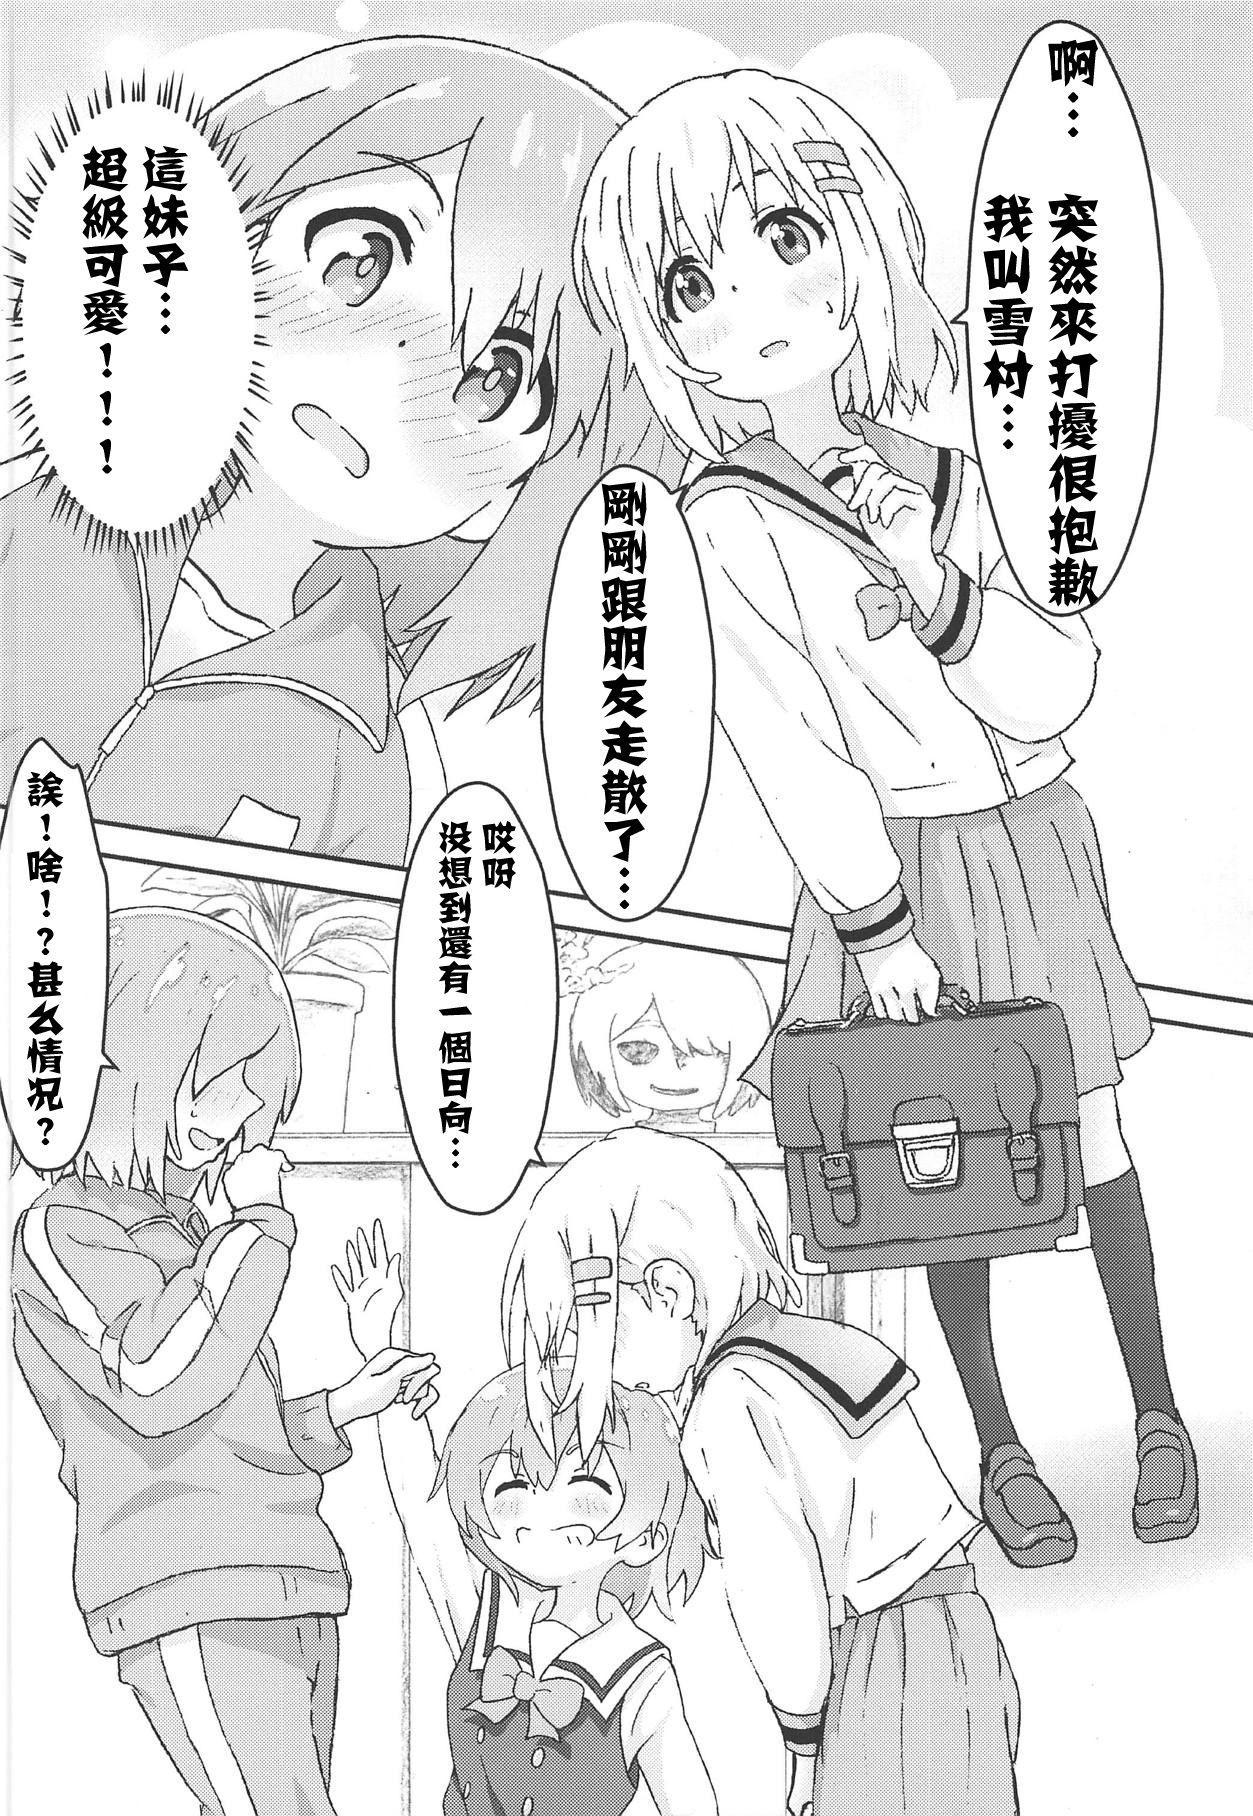 Female Watashi ni Yama Susume Shoujo ga Maiorita! - Watashi ni tenshi ga maiorita Yama no susume Classroom - Page 4